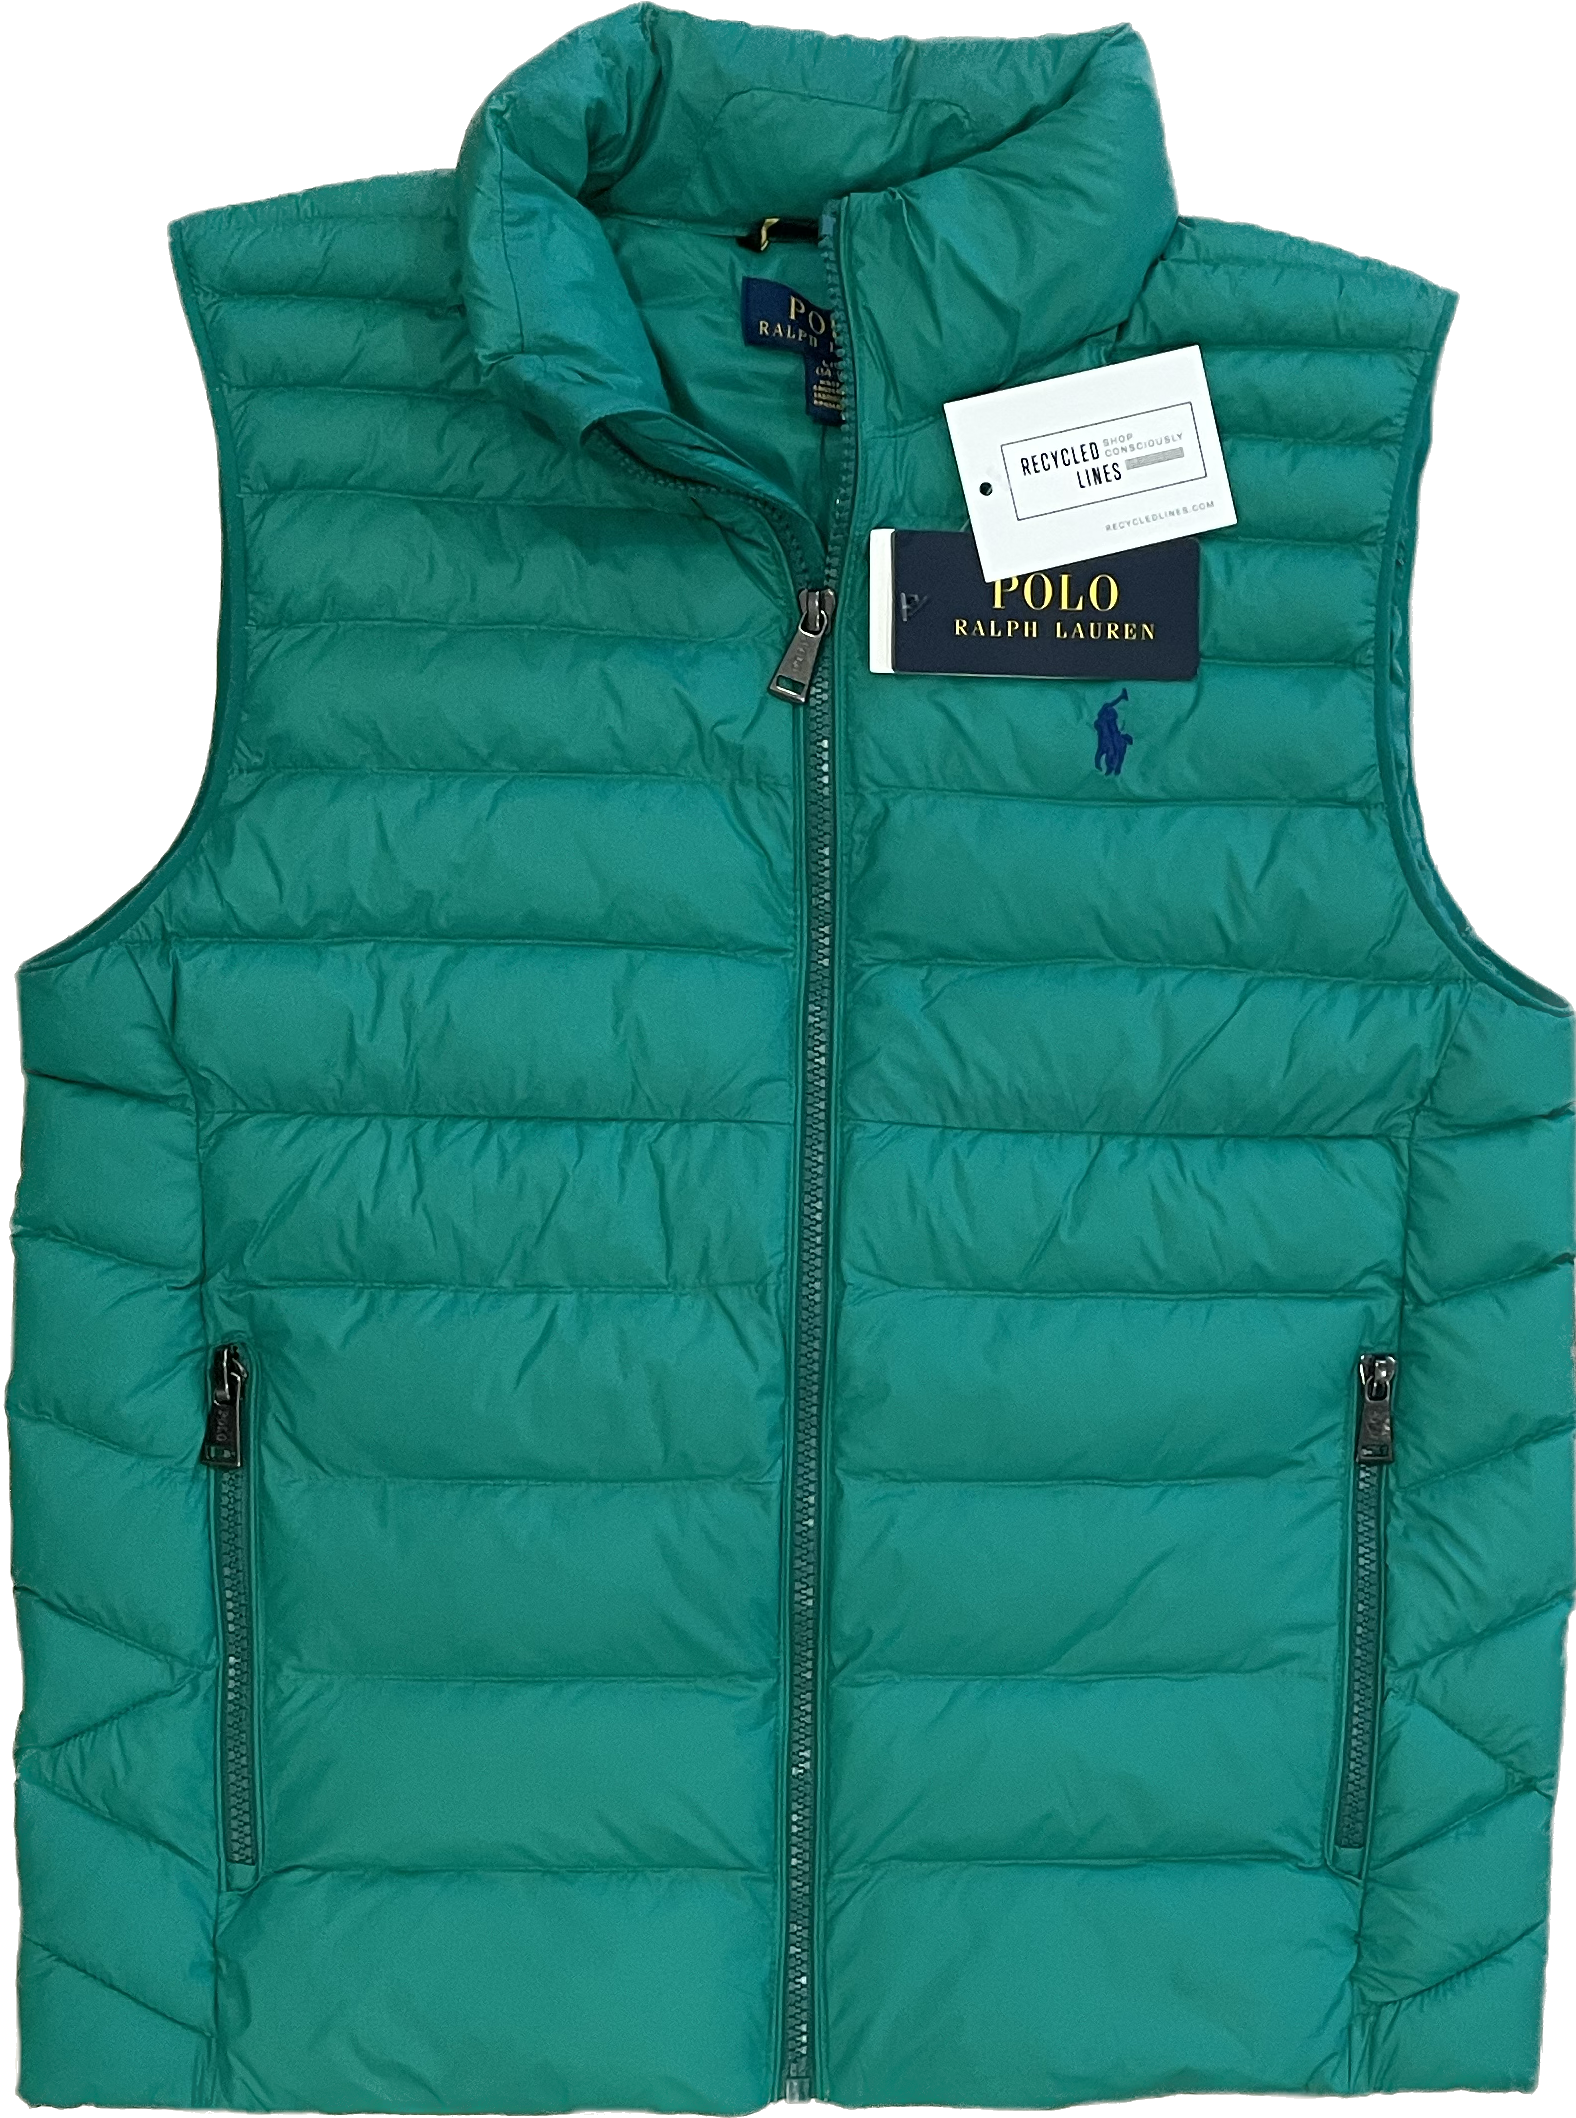 Polo Ralph Lauren NWT Puffer Vest, Green Boys Size L (14/16)